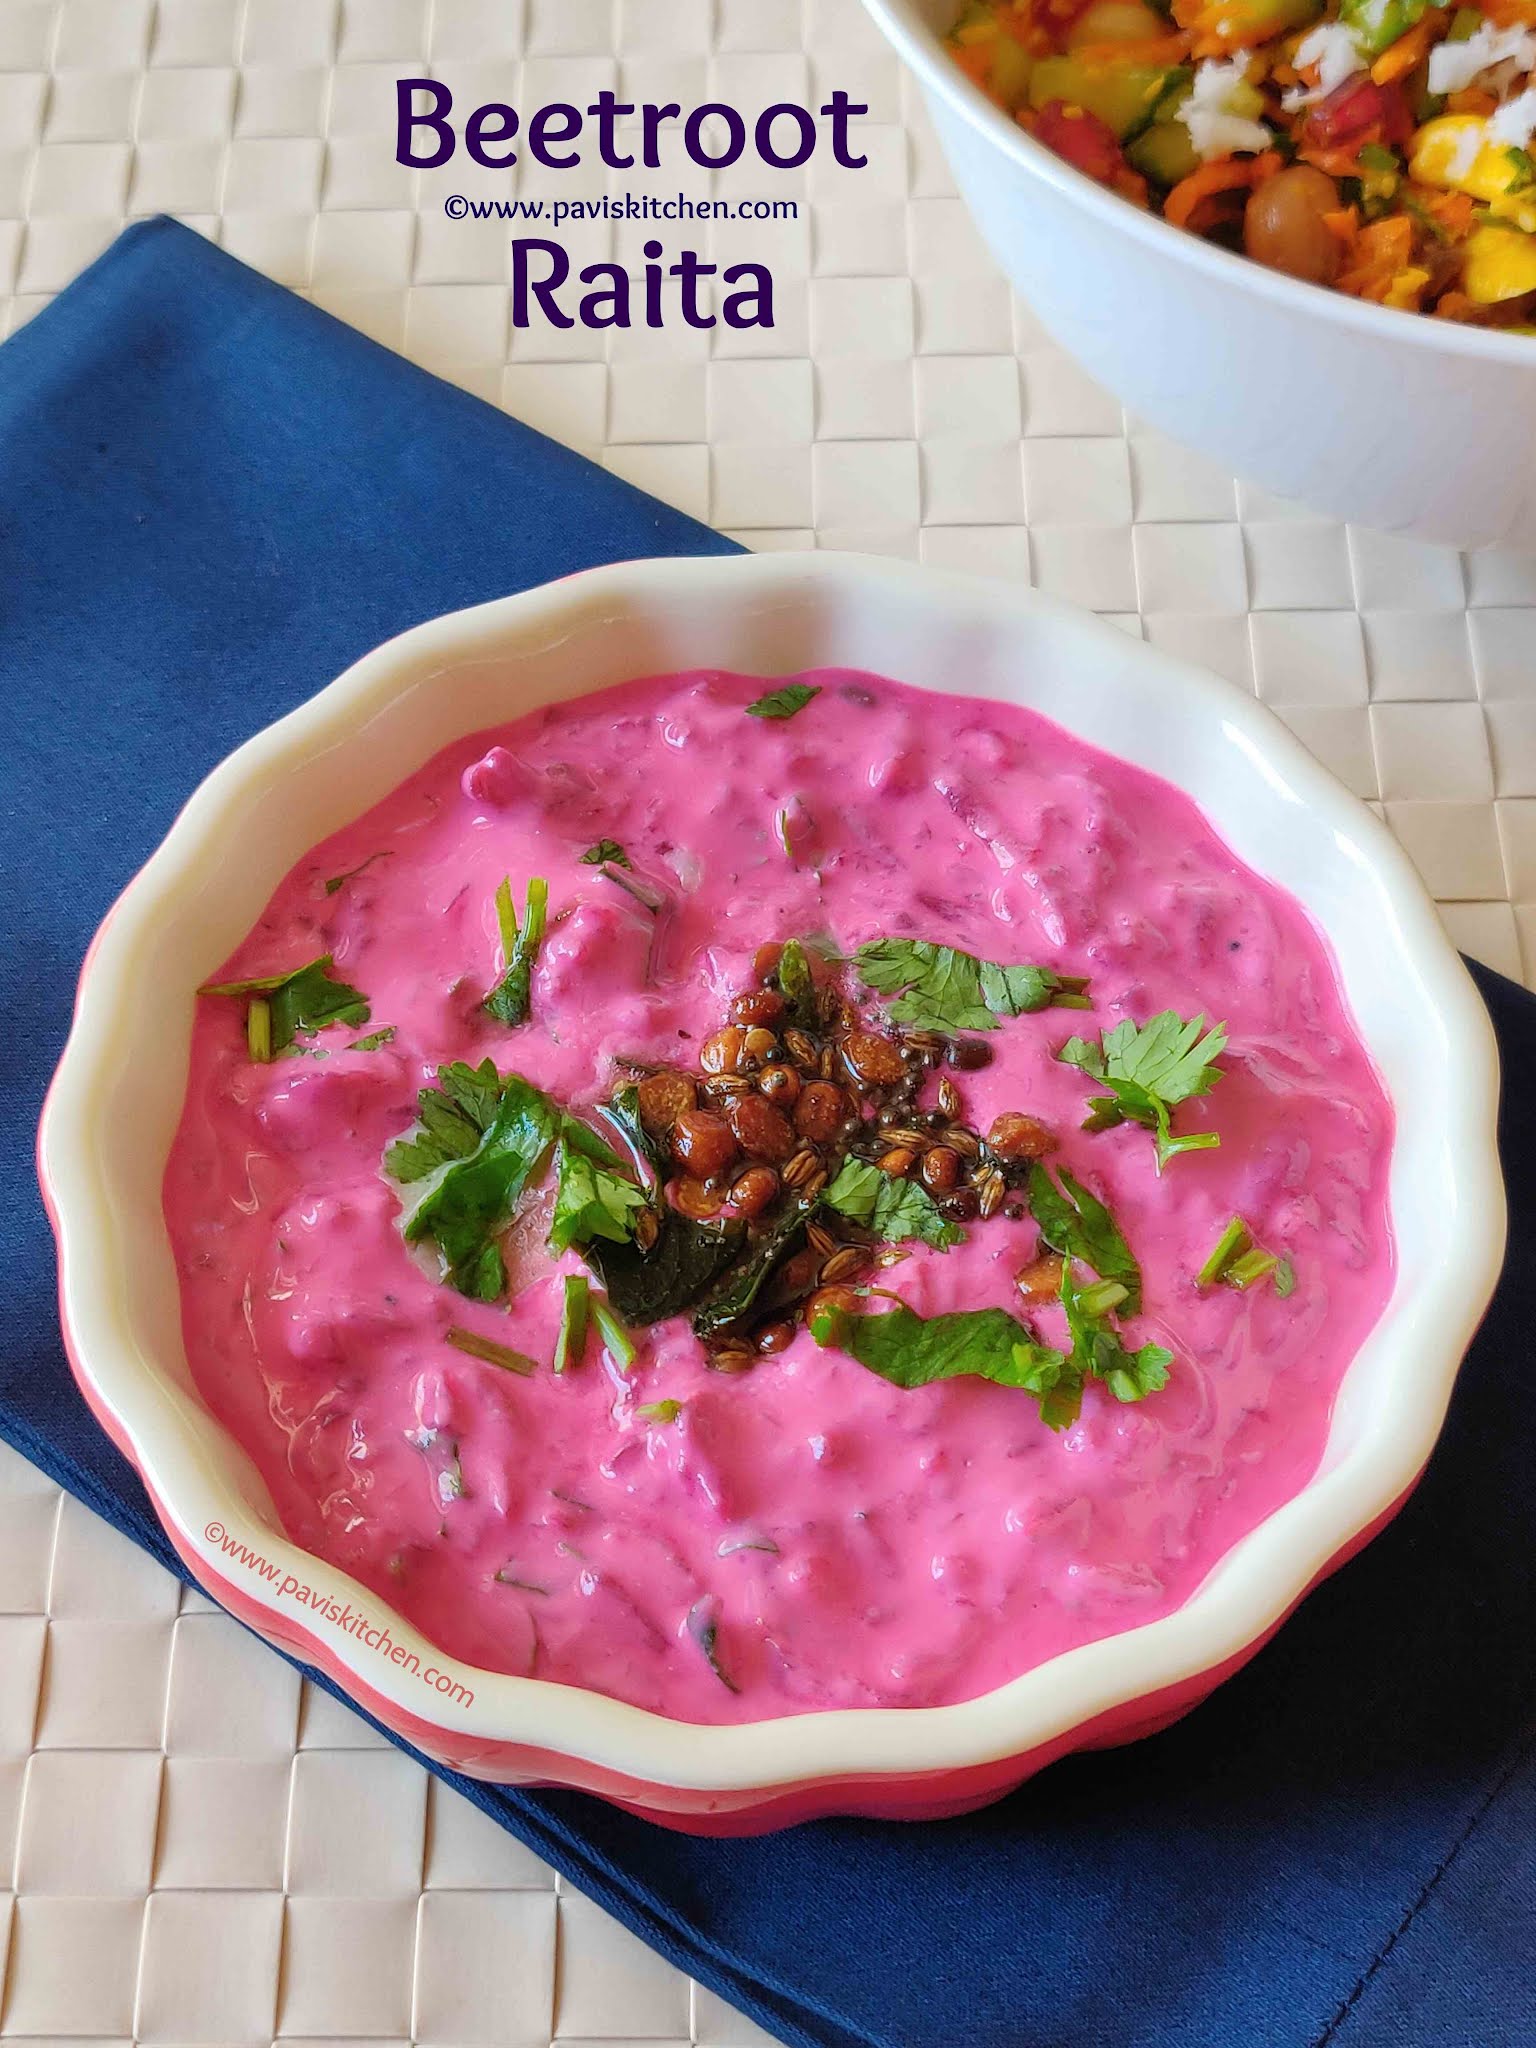 Beetroot raita recipe | Beetroot pachadi recipe | Indian yogurt side dish